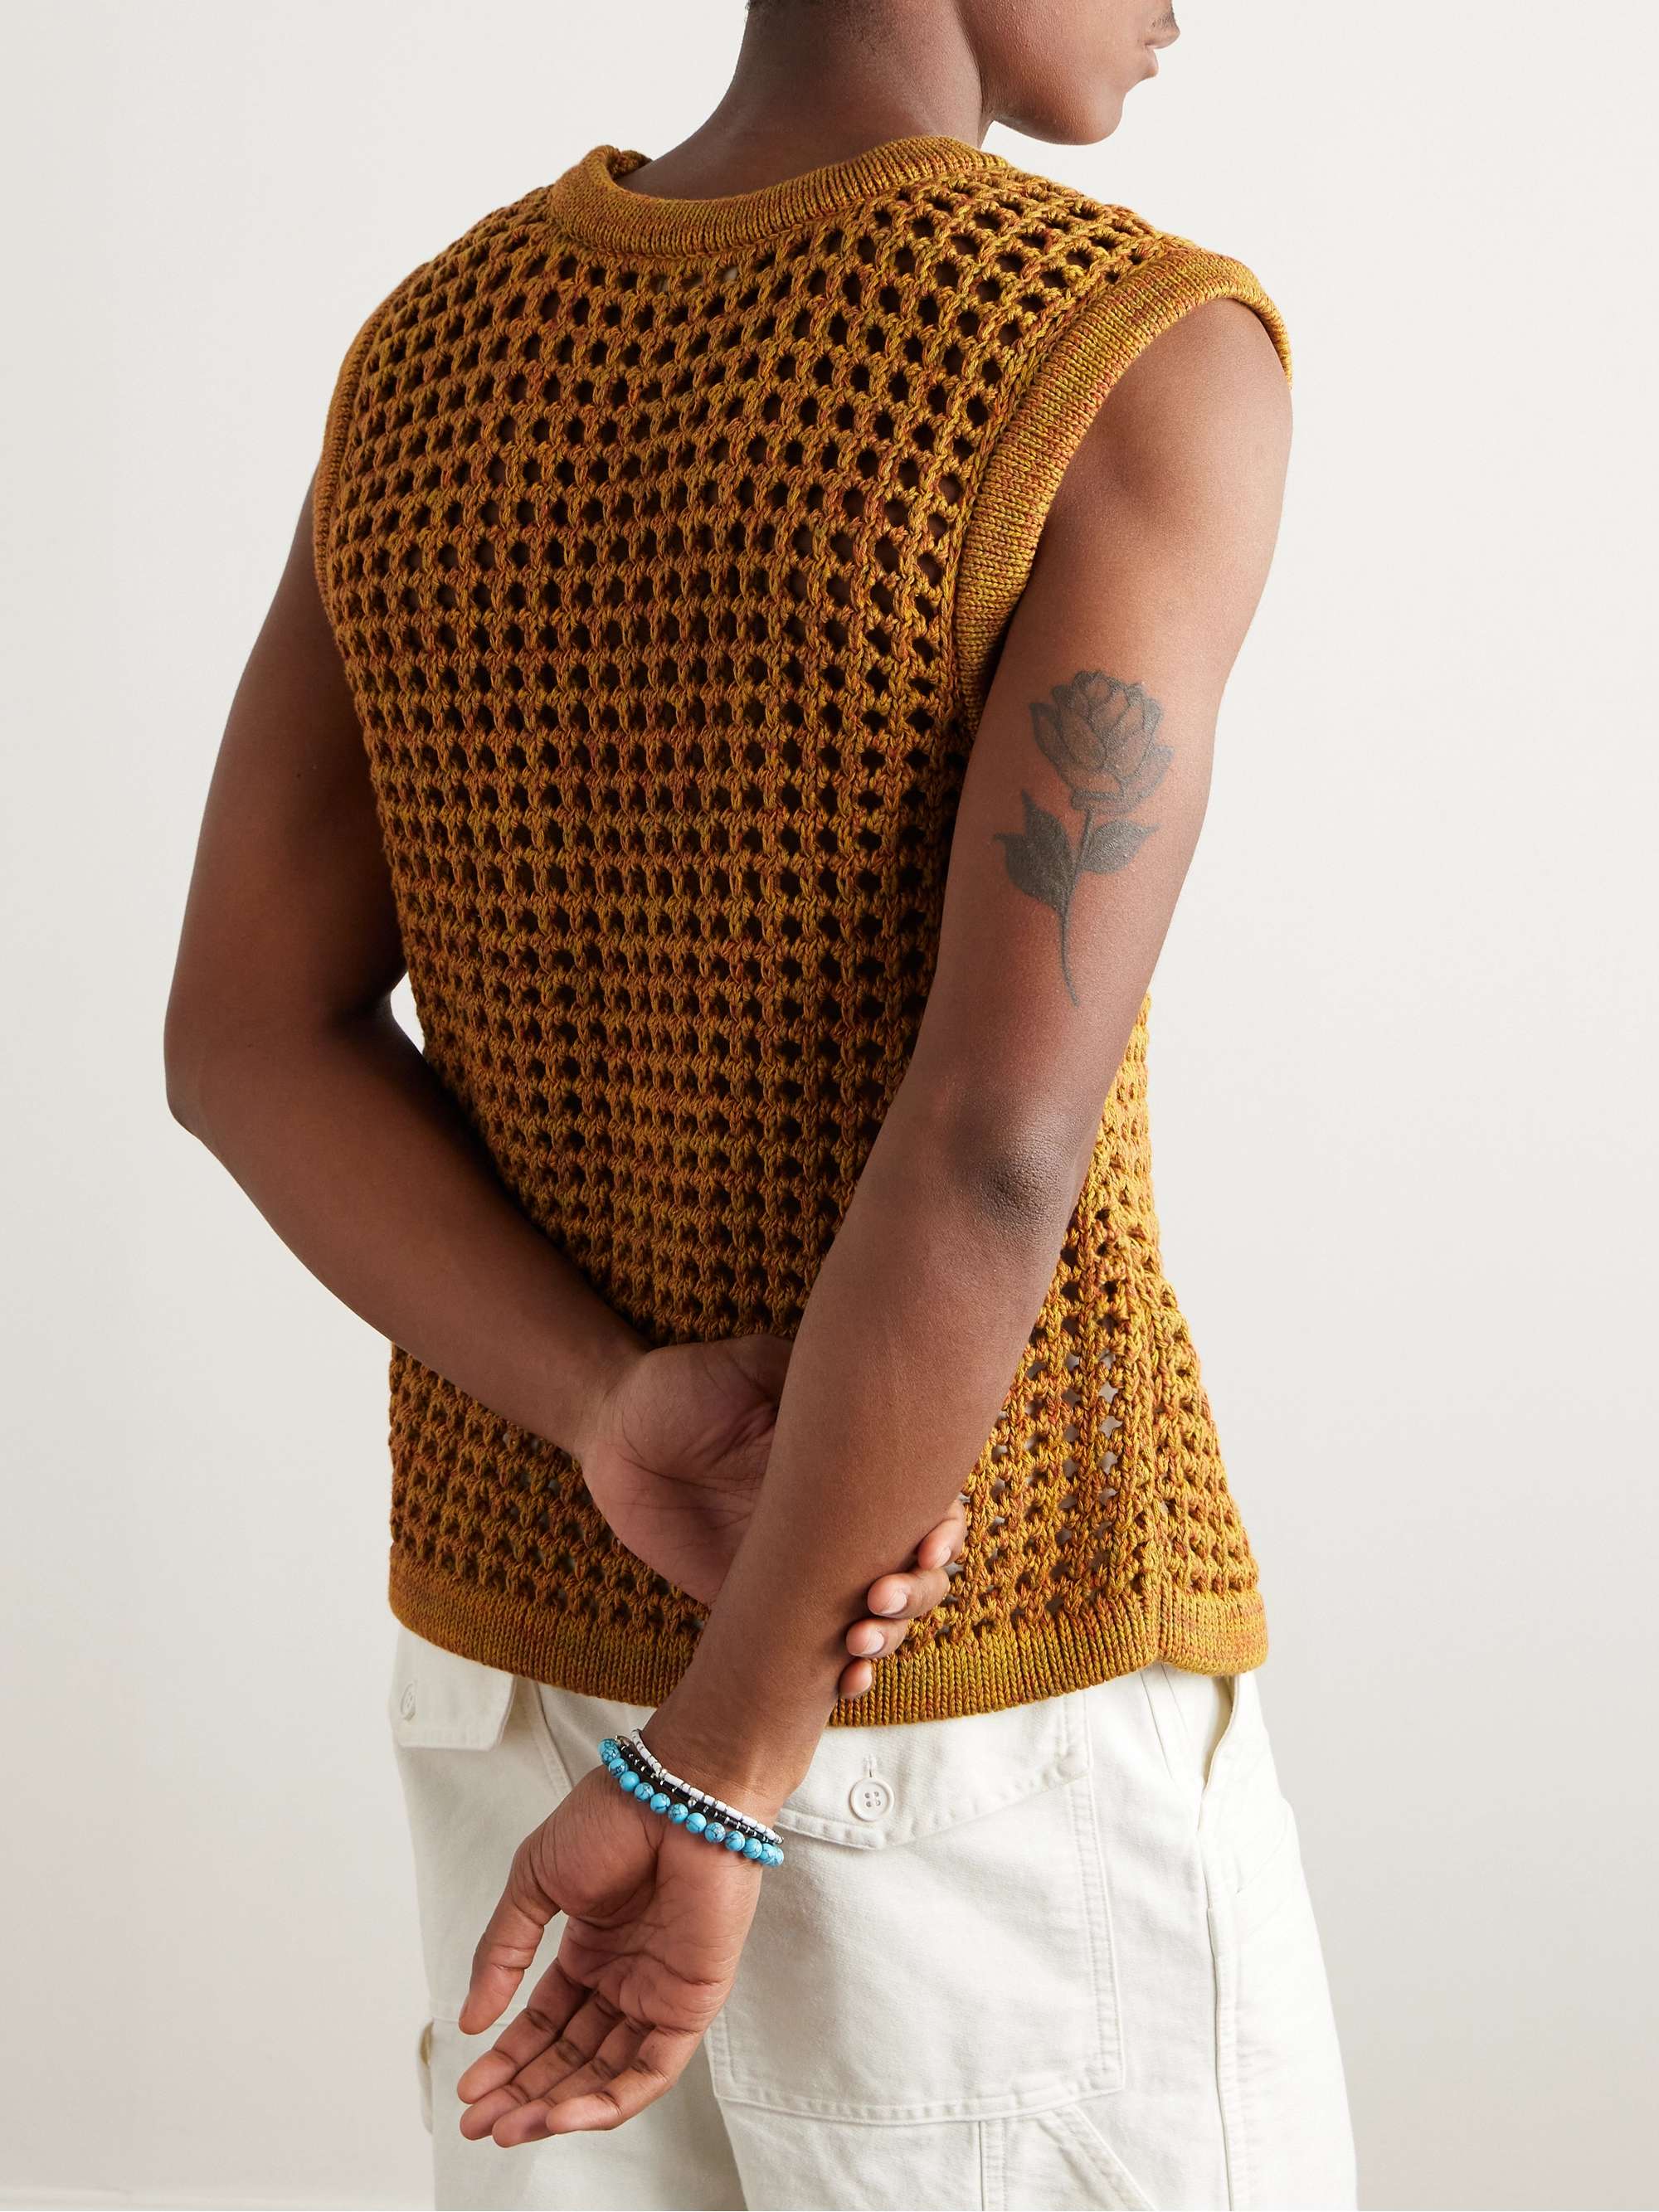 NICHOLAS DALEY Crocheted Cotton Sweater Vest for Men | MR PORTER